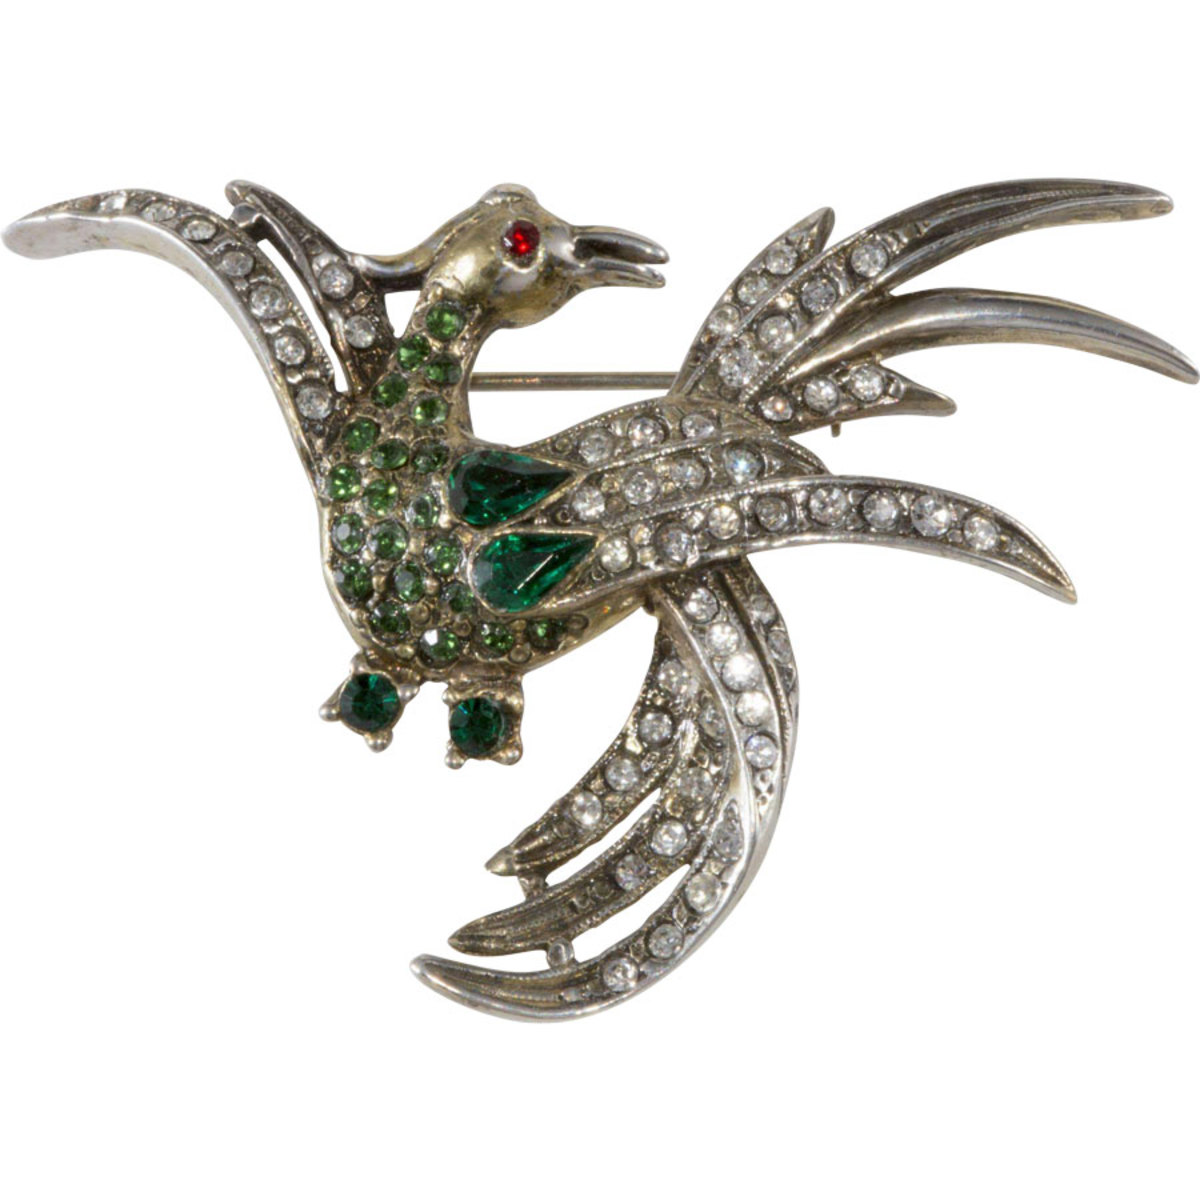 Schiaparelli sterling silver bird brooch, 1940s, $125-$175.